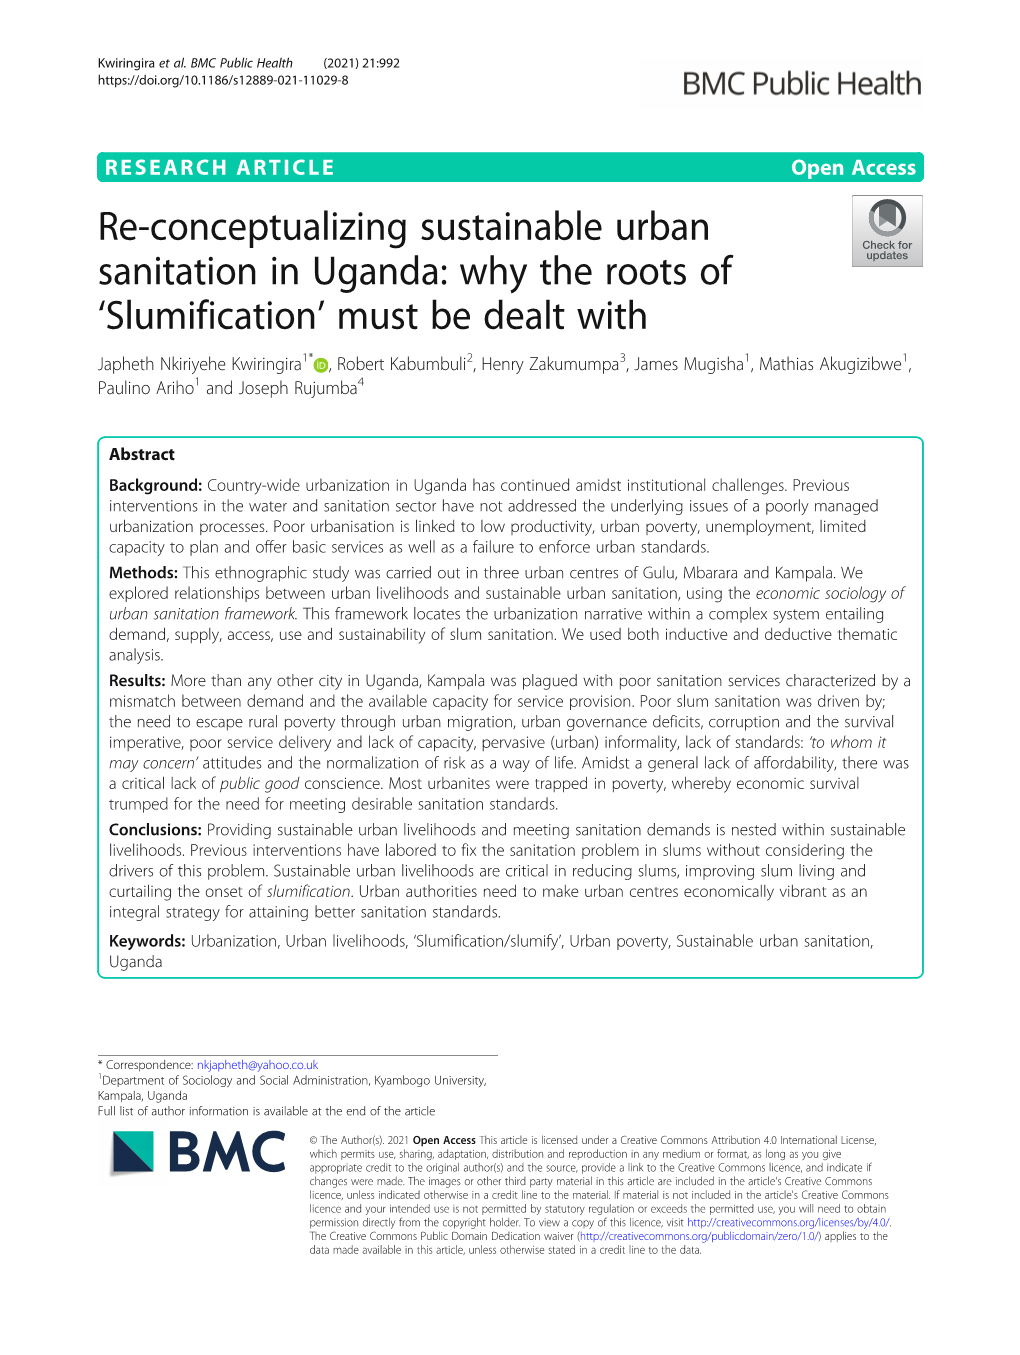 Re-Conceptualizing Sustainable Urban Sanitation in Uganda